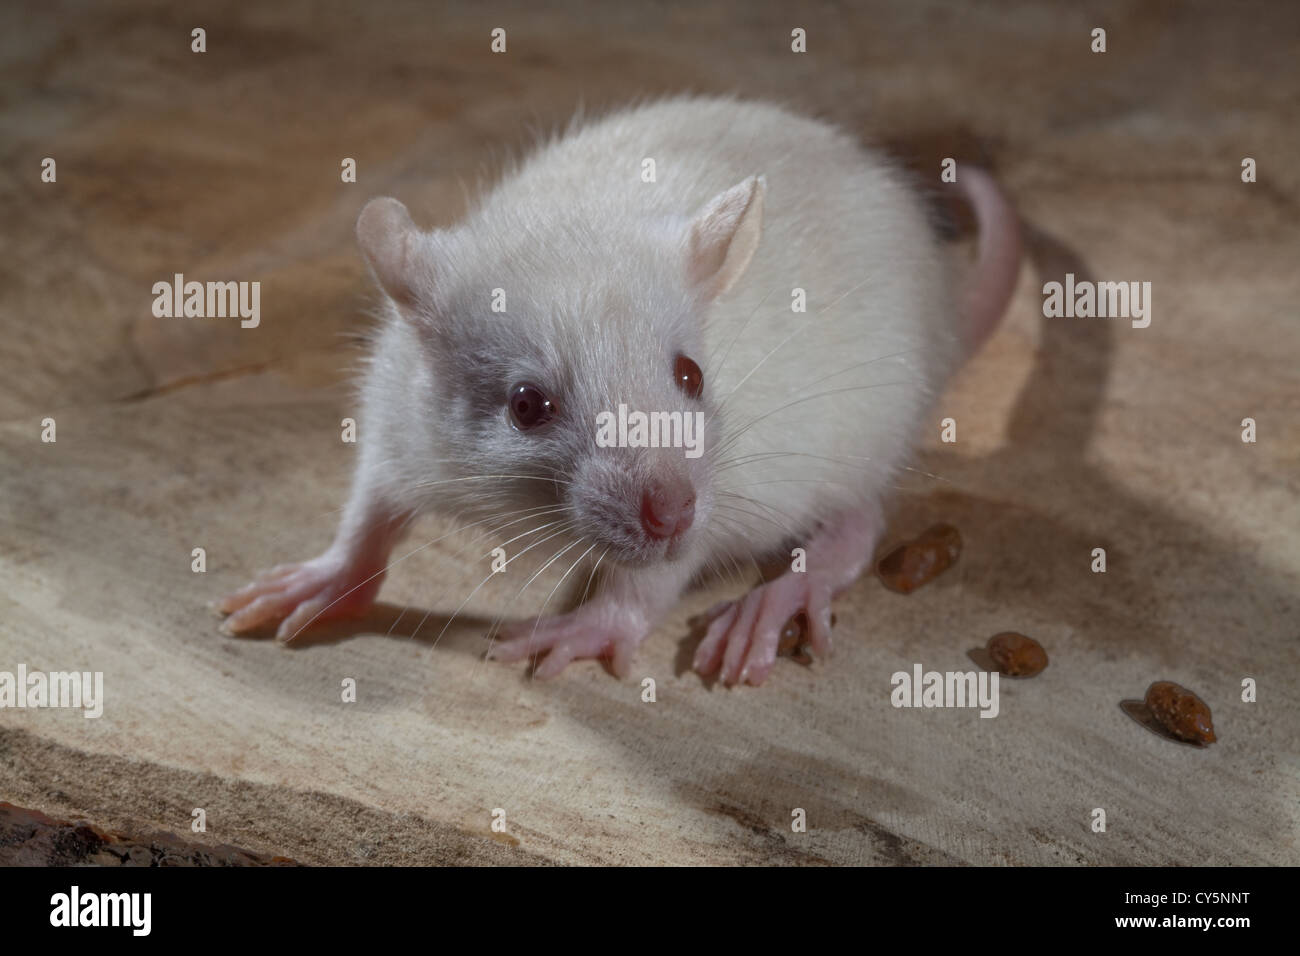 Young White or Albino Rat (Rattus norvegicus). Droppings or faecal pellets alongside. Stock Photo